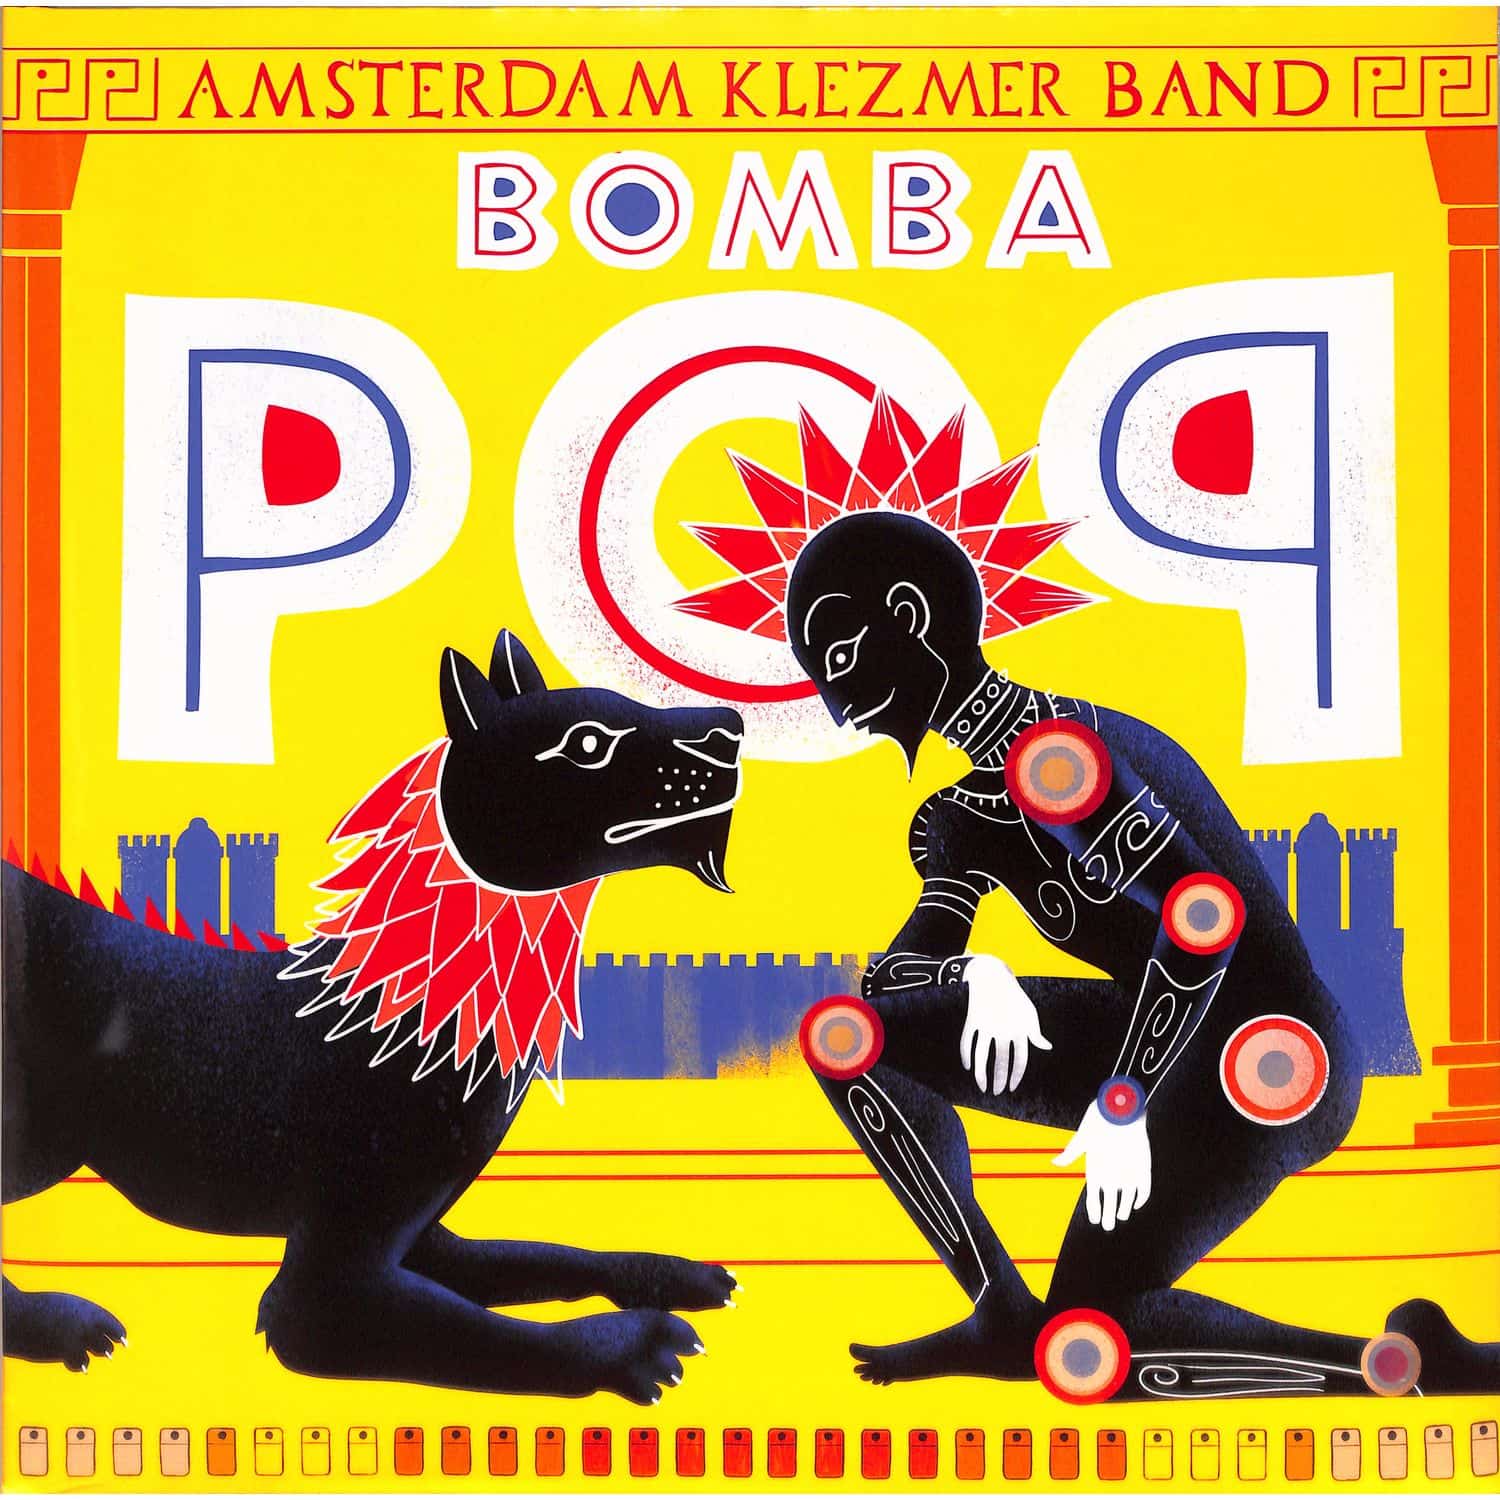 Amsterdam Klezmer Band - BOMBA POP